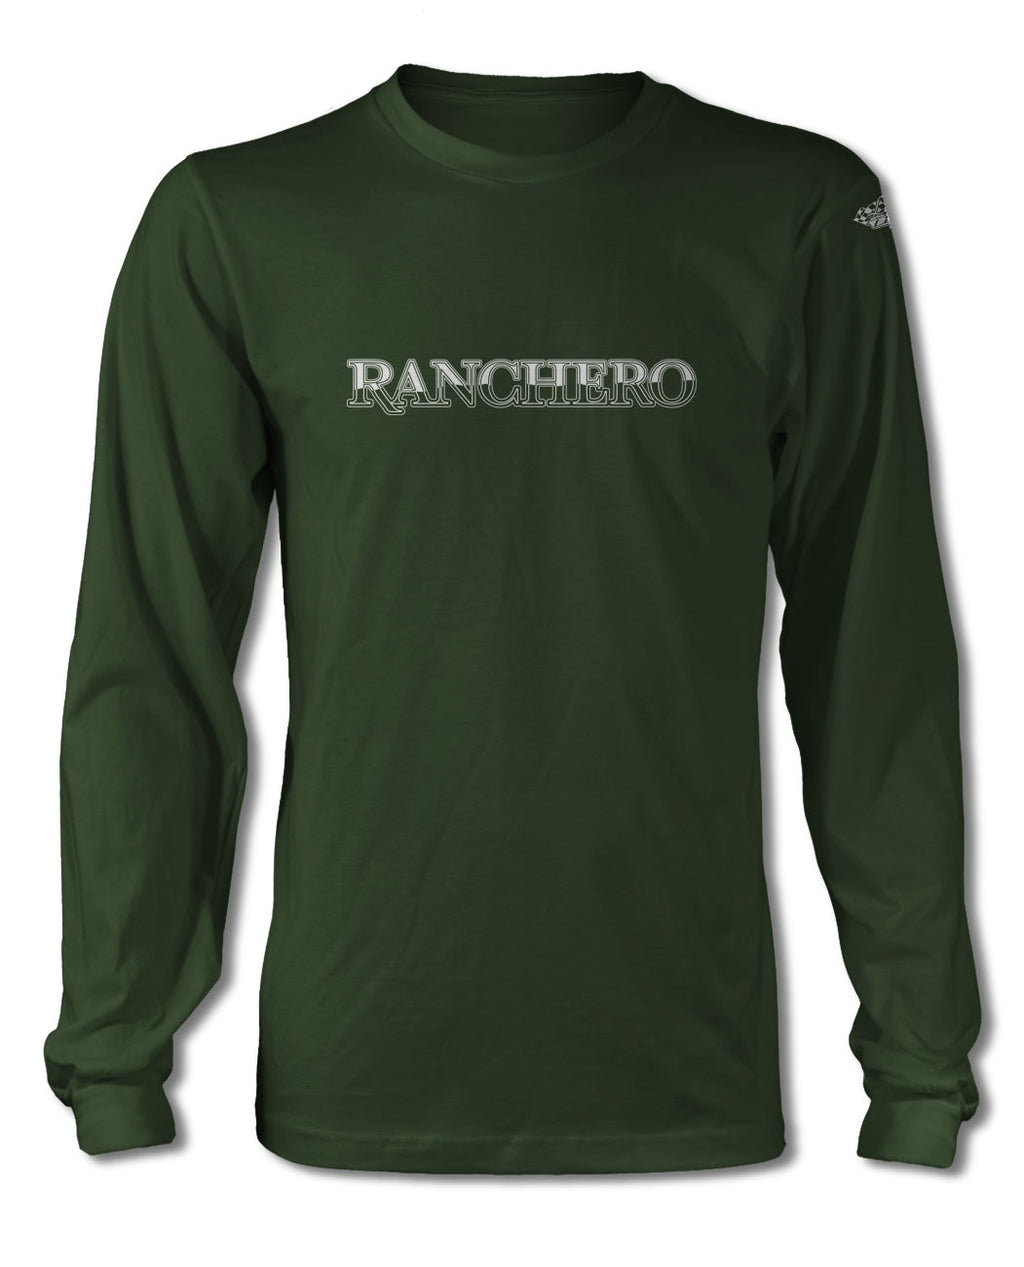 1977 - 1979 Ford Ranchero Emblem T-Shirt - Long Sleeves - Emblem